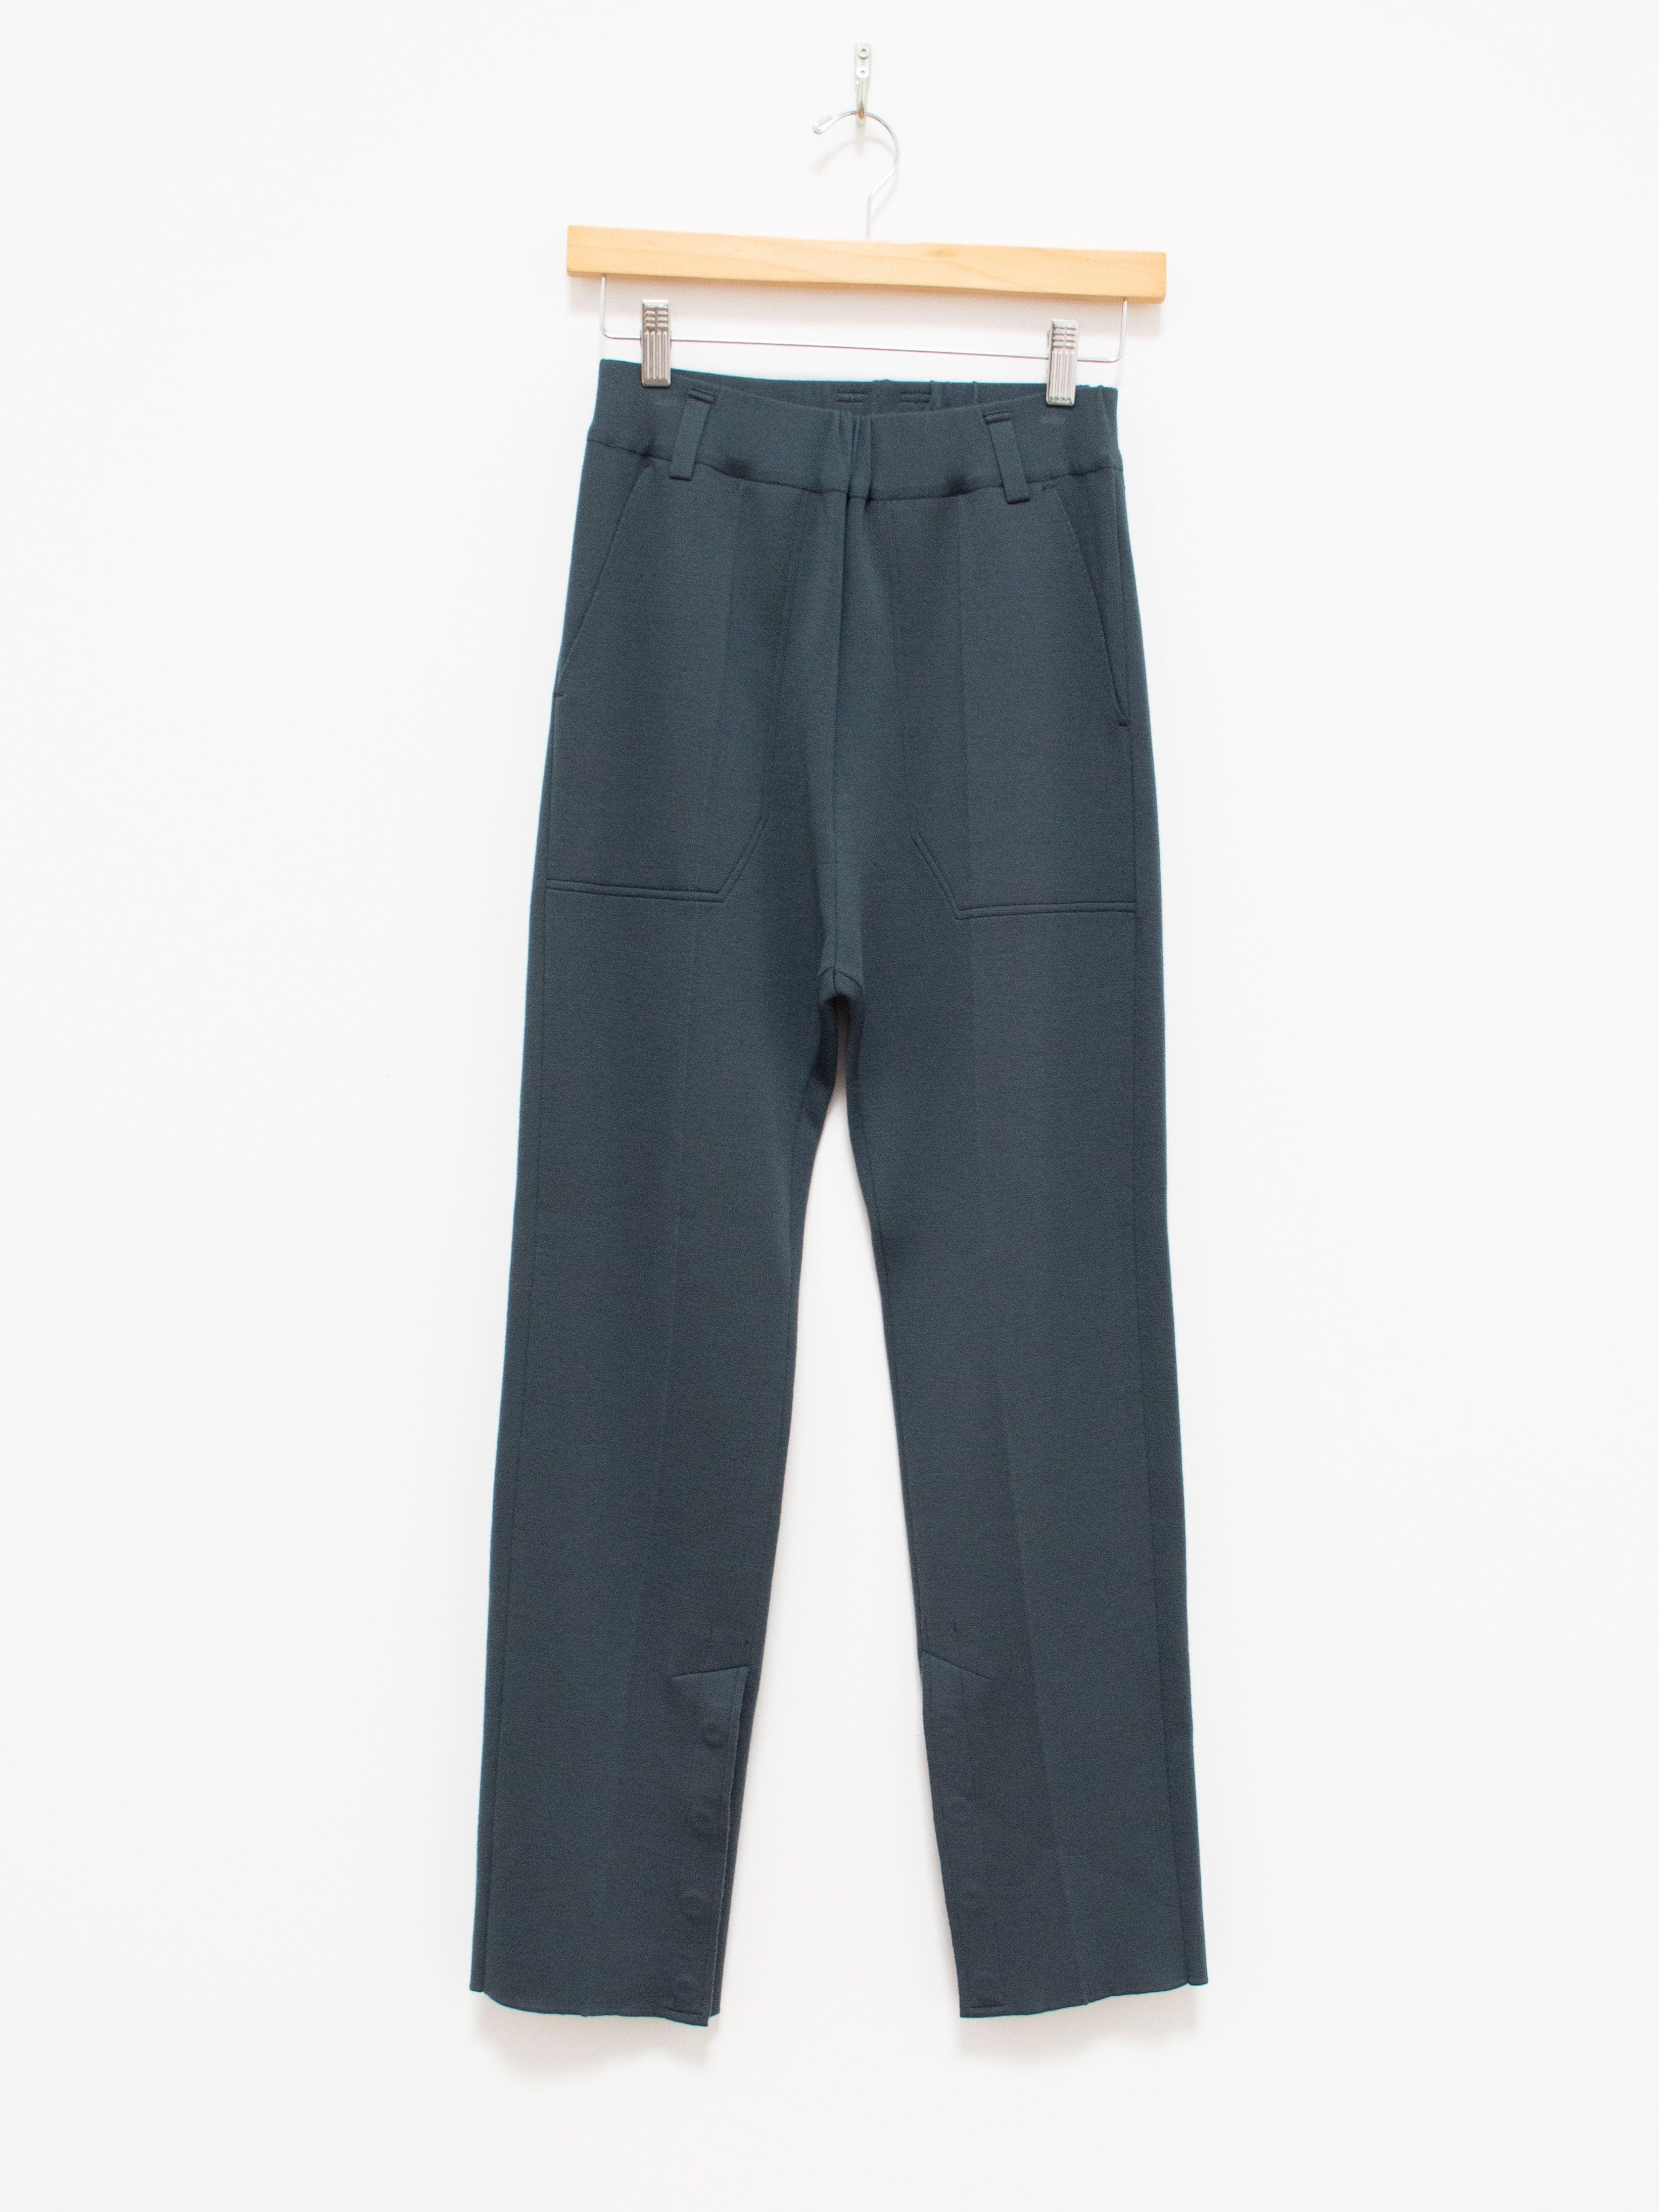 Namu Shop - Unfil Superfine Merino Smooth Knit Trousers - Blue Gray